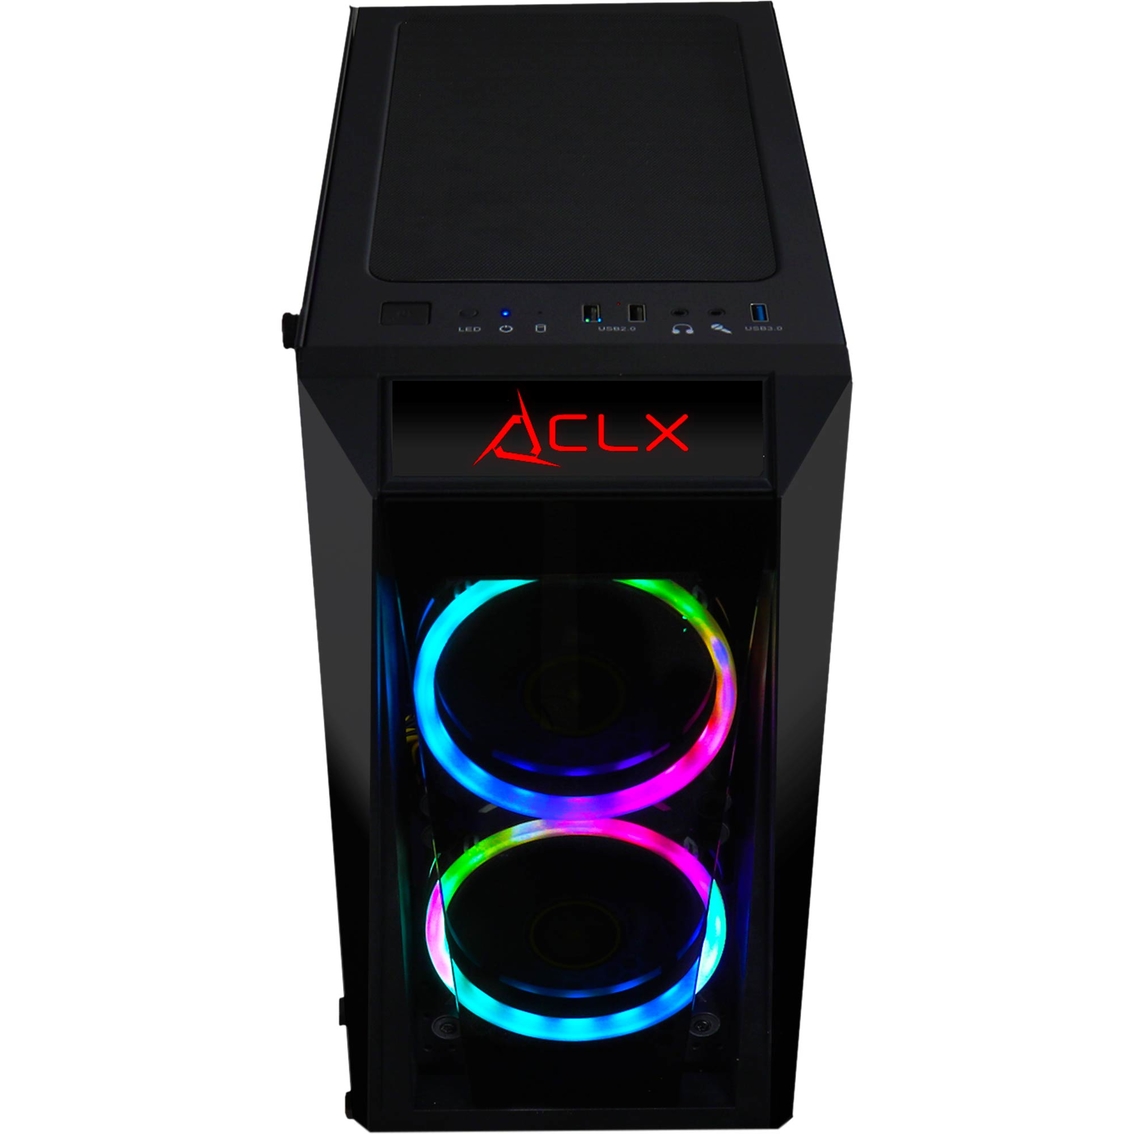 CLX SET VR-Ready AMD Ryzen 7 3.6GHz 16GB RAM 960GB SSD Gaming Desktop - Image 5 of 7